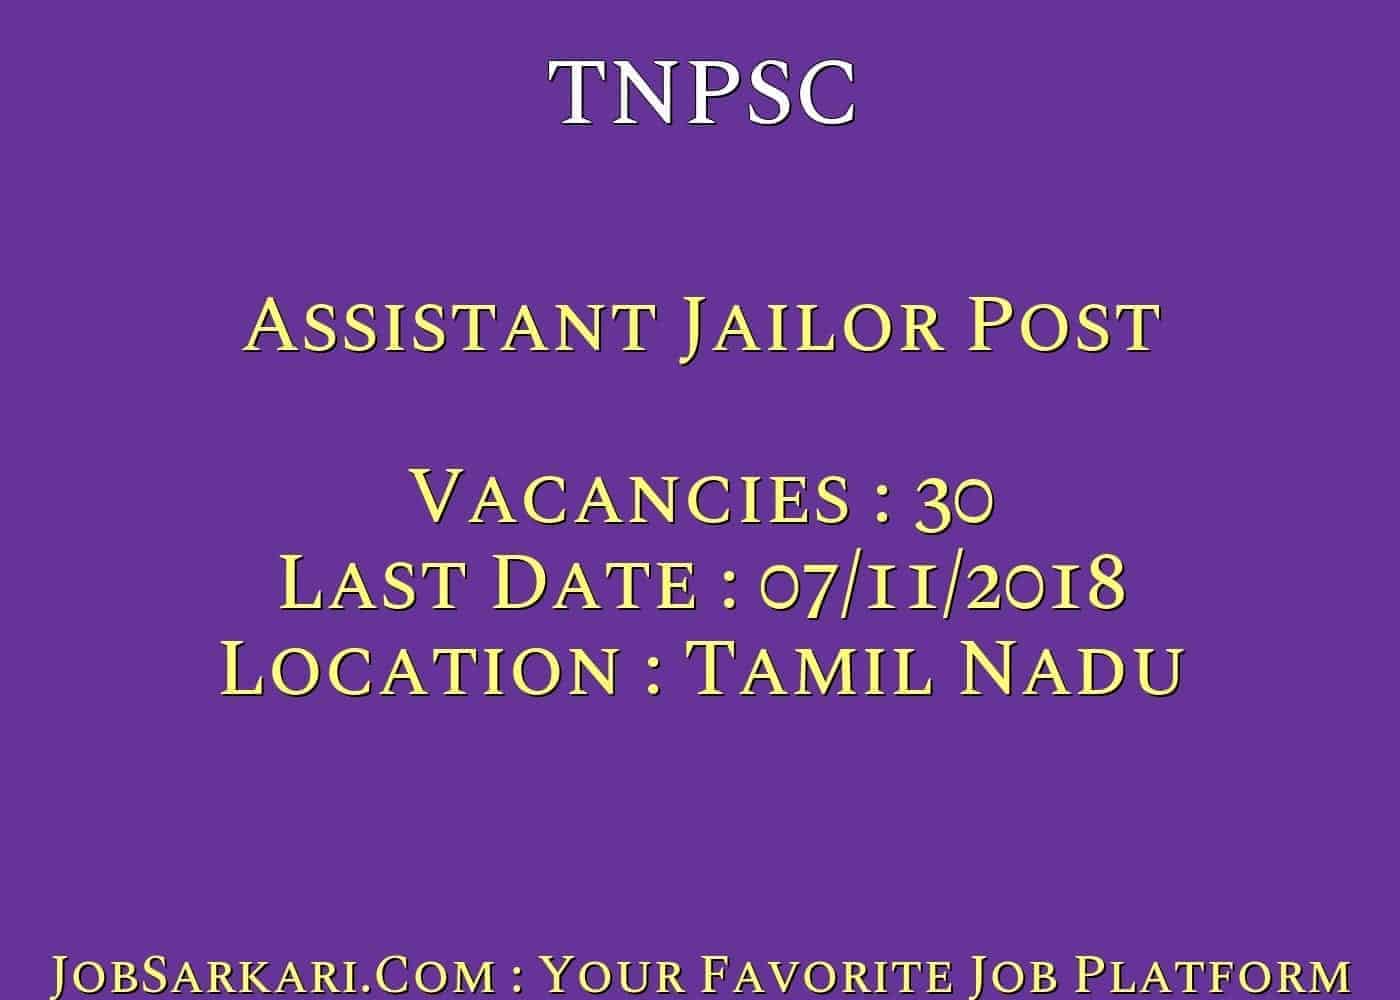 TNPSC Recruitment 2018 For Assistant Jailor Post